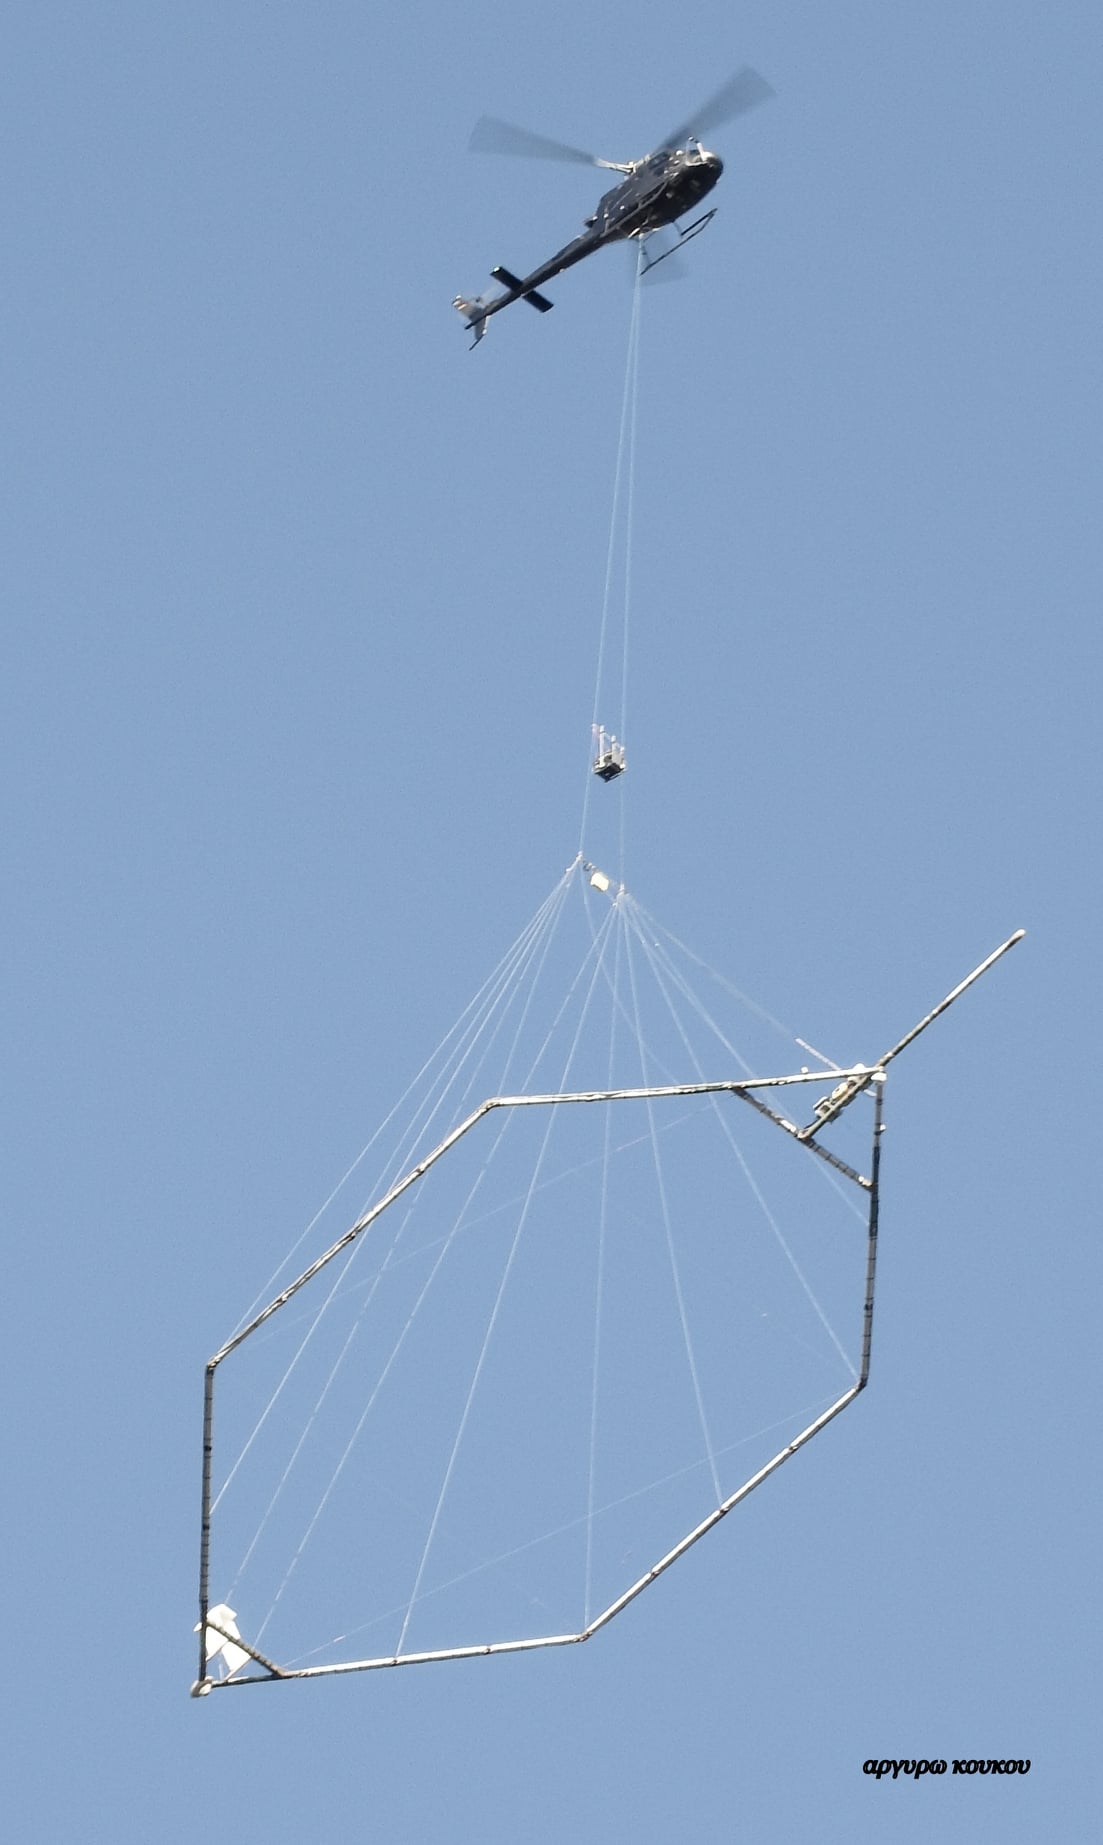 Eλικόπτερο “σκανάρει” το Δήμο Αριστοτέλη για μέταλλα (φωτογραφίες) #skouries